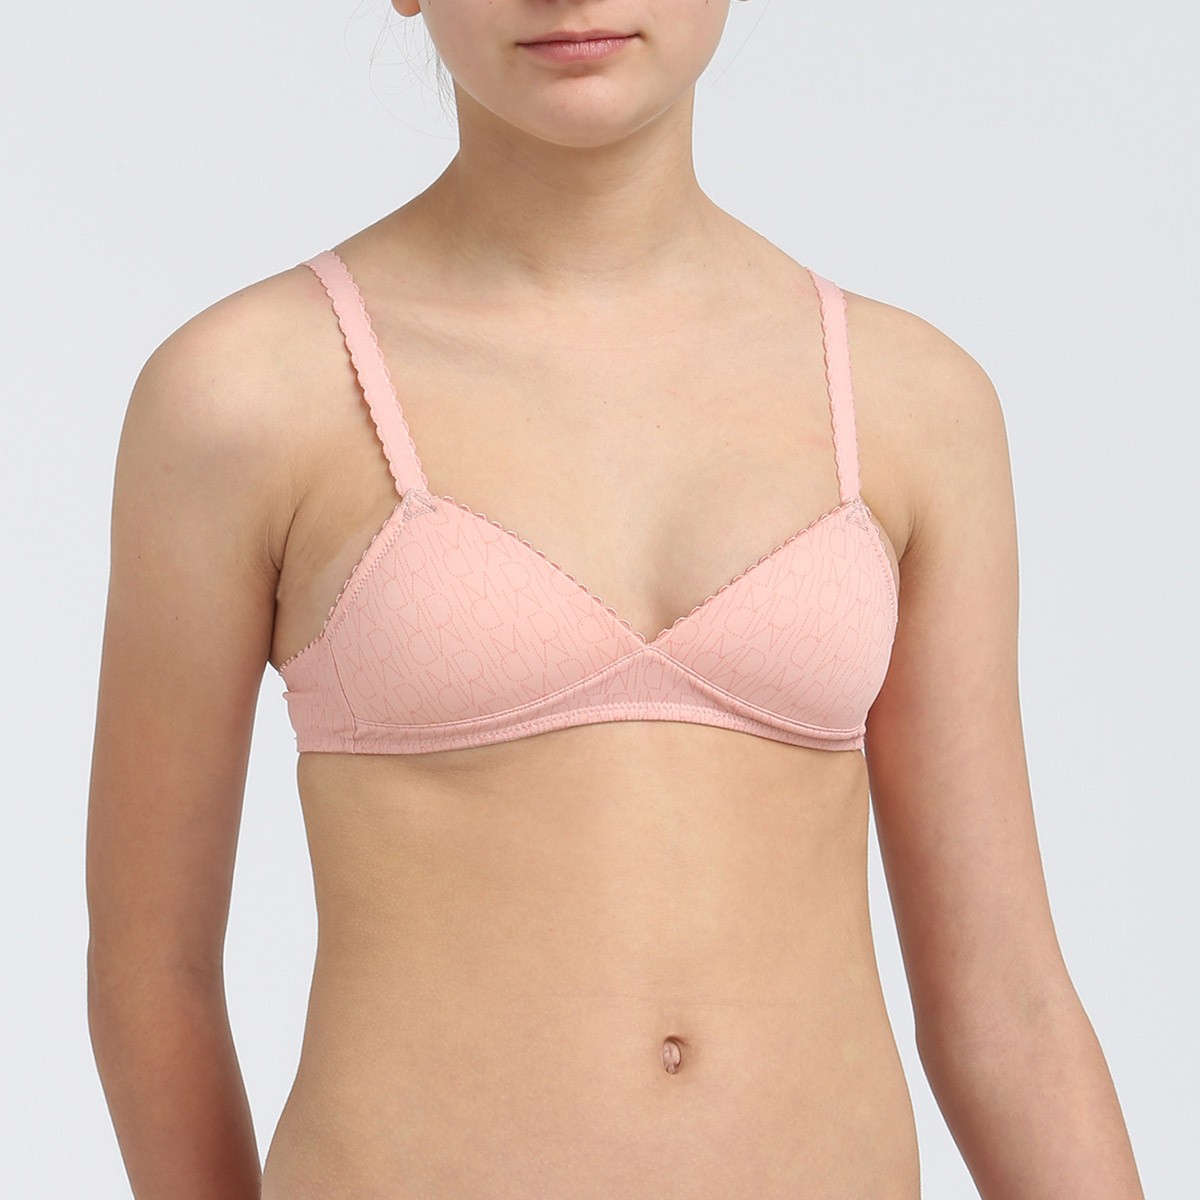 gvdentm Bras For Women Push Up Push-Up T-Shirt Bra, Modern Demi Bra,  Lightly Padded Bra with Convertible Straps Hot Pink,46D